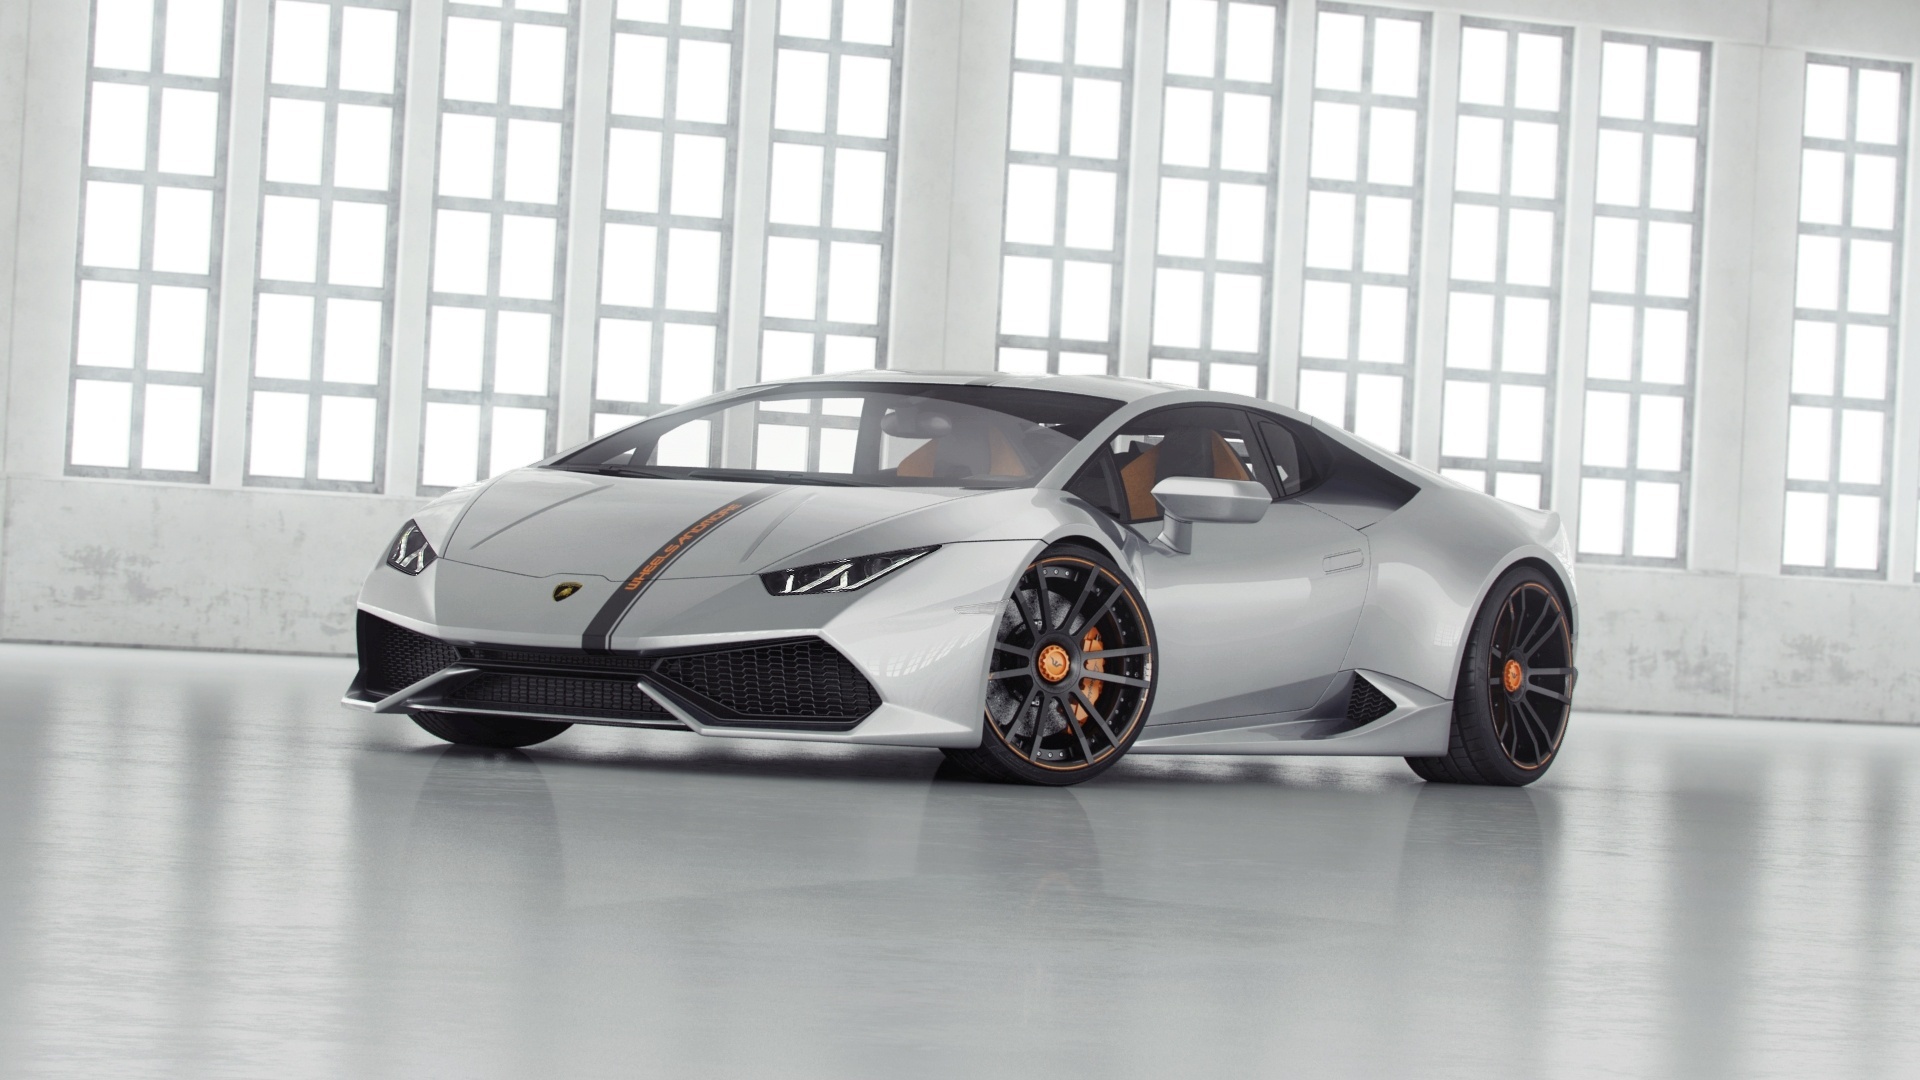 Lamborghini Huracan, Stylish wallpaper, High-res image, Perfect resolution, 1920x1080 Full HD Desktop